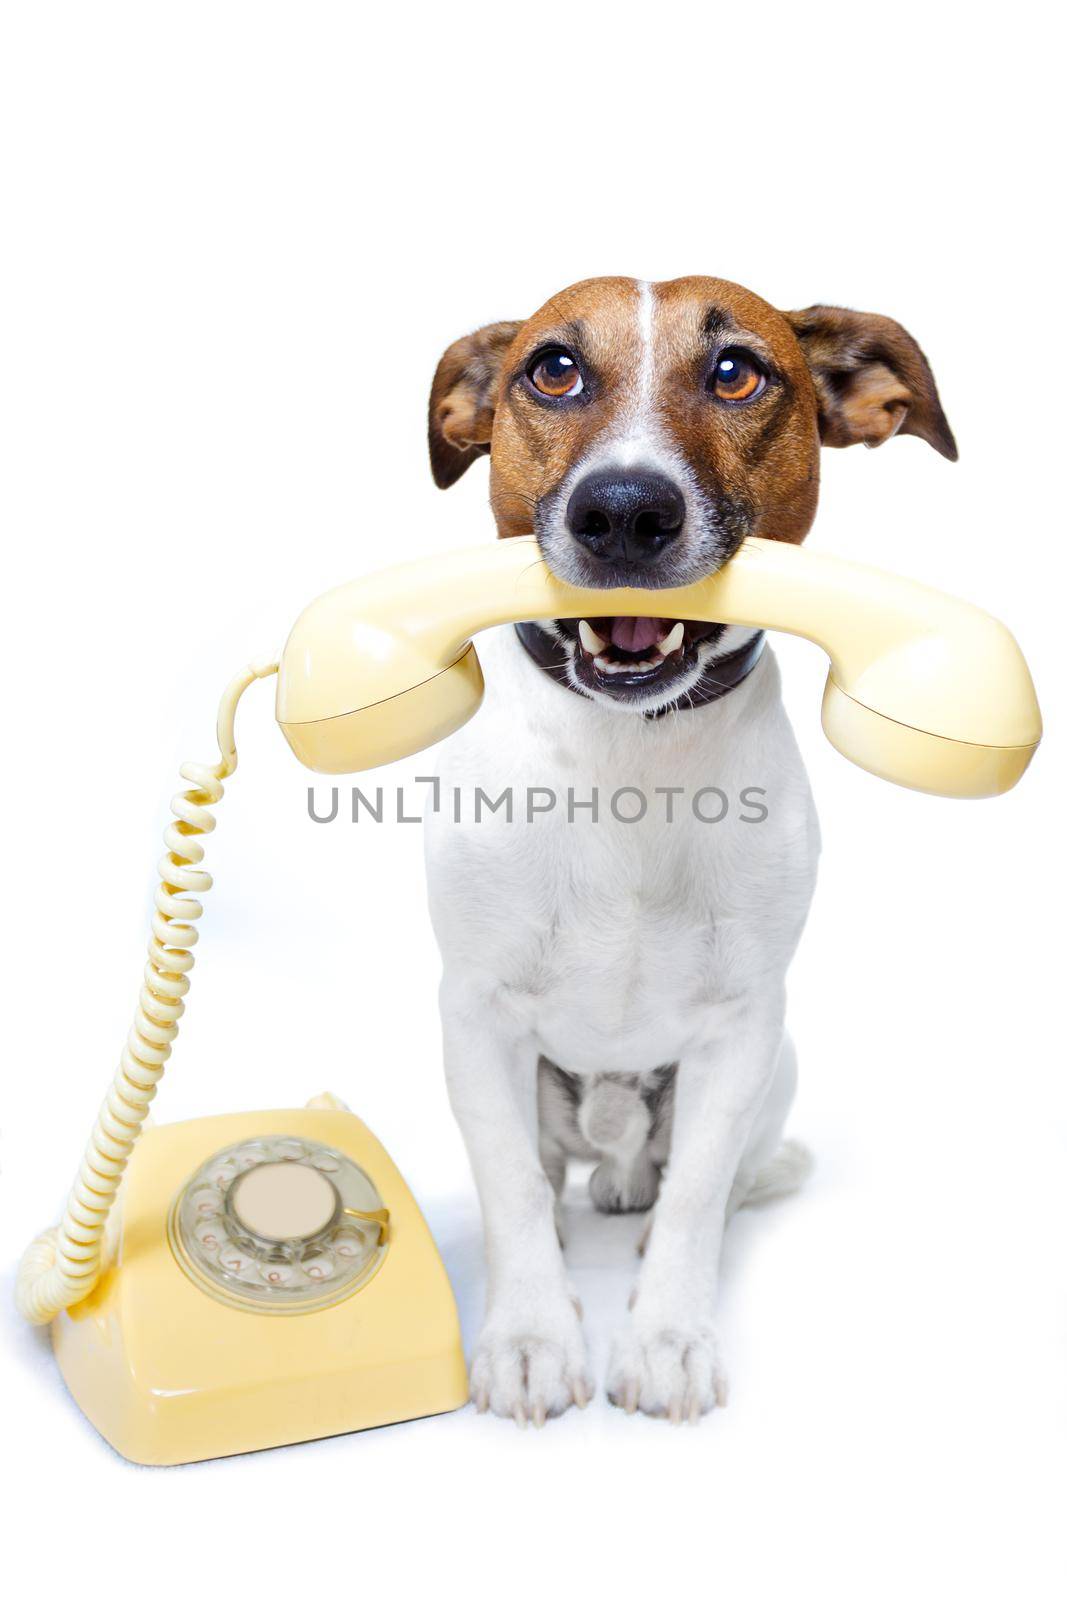 dog phone call by Brosch